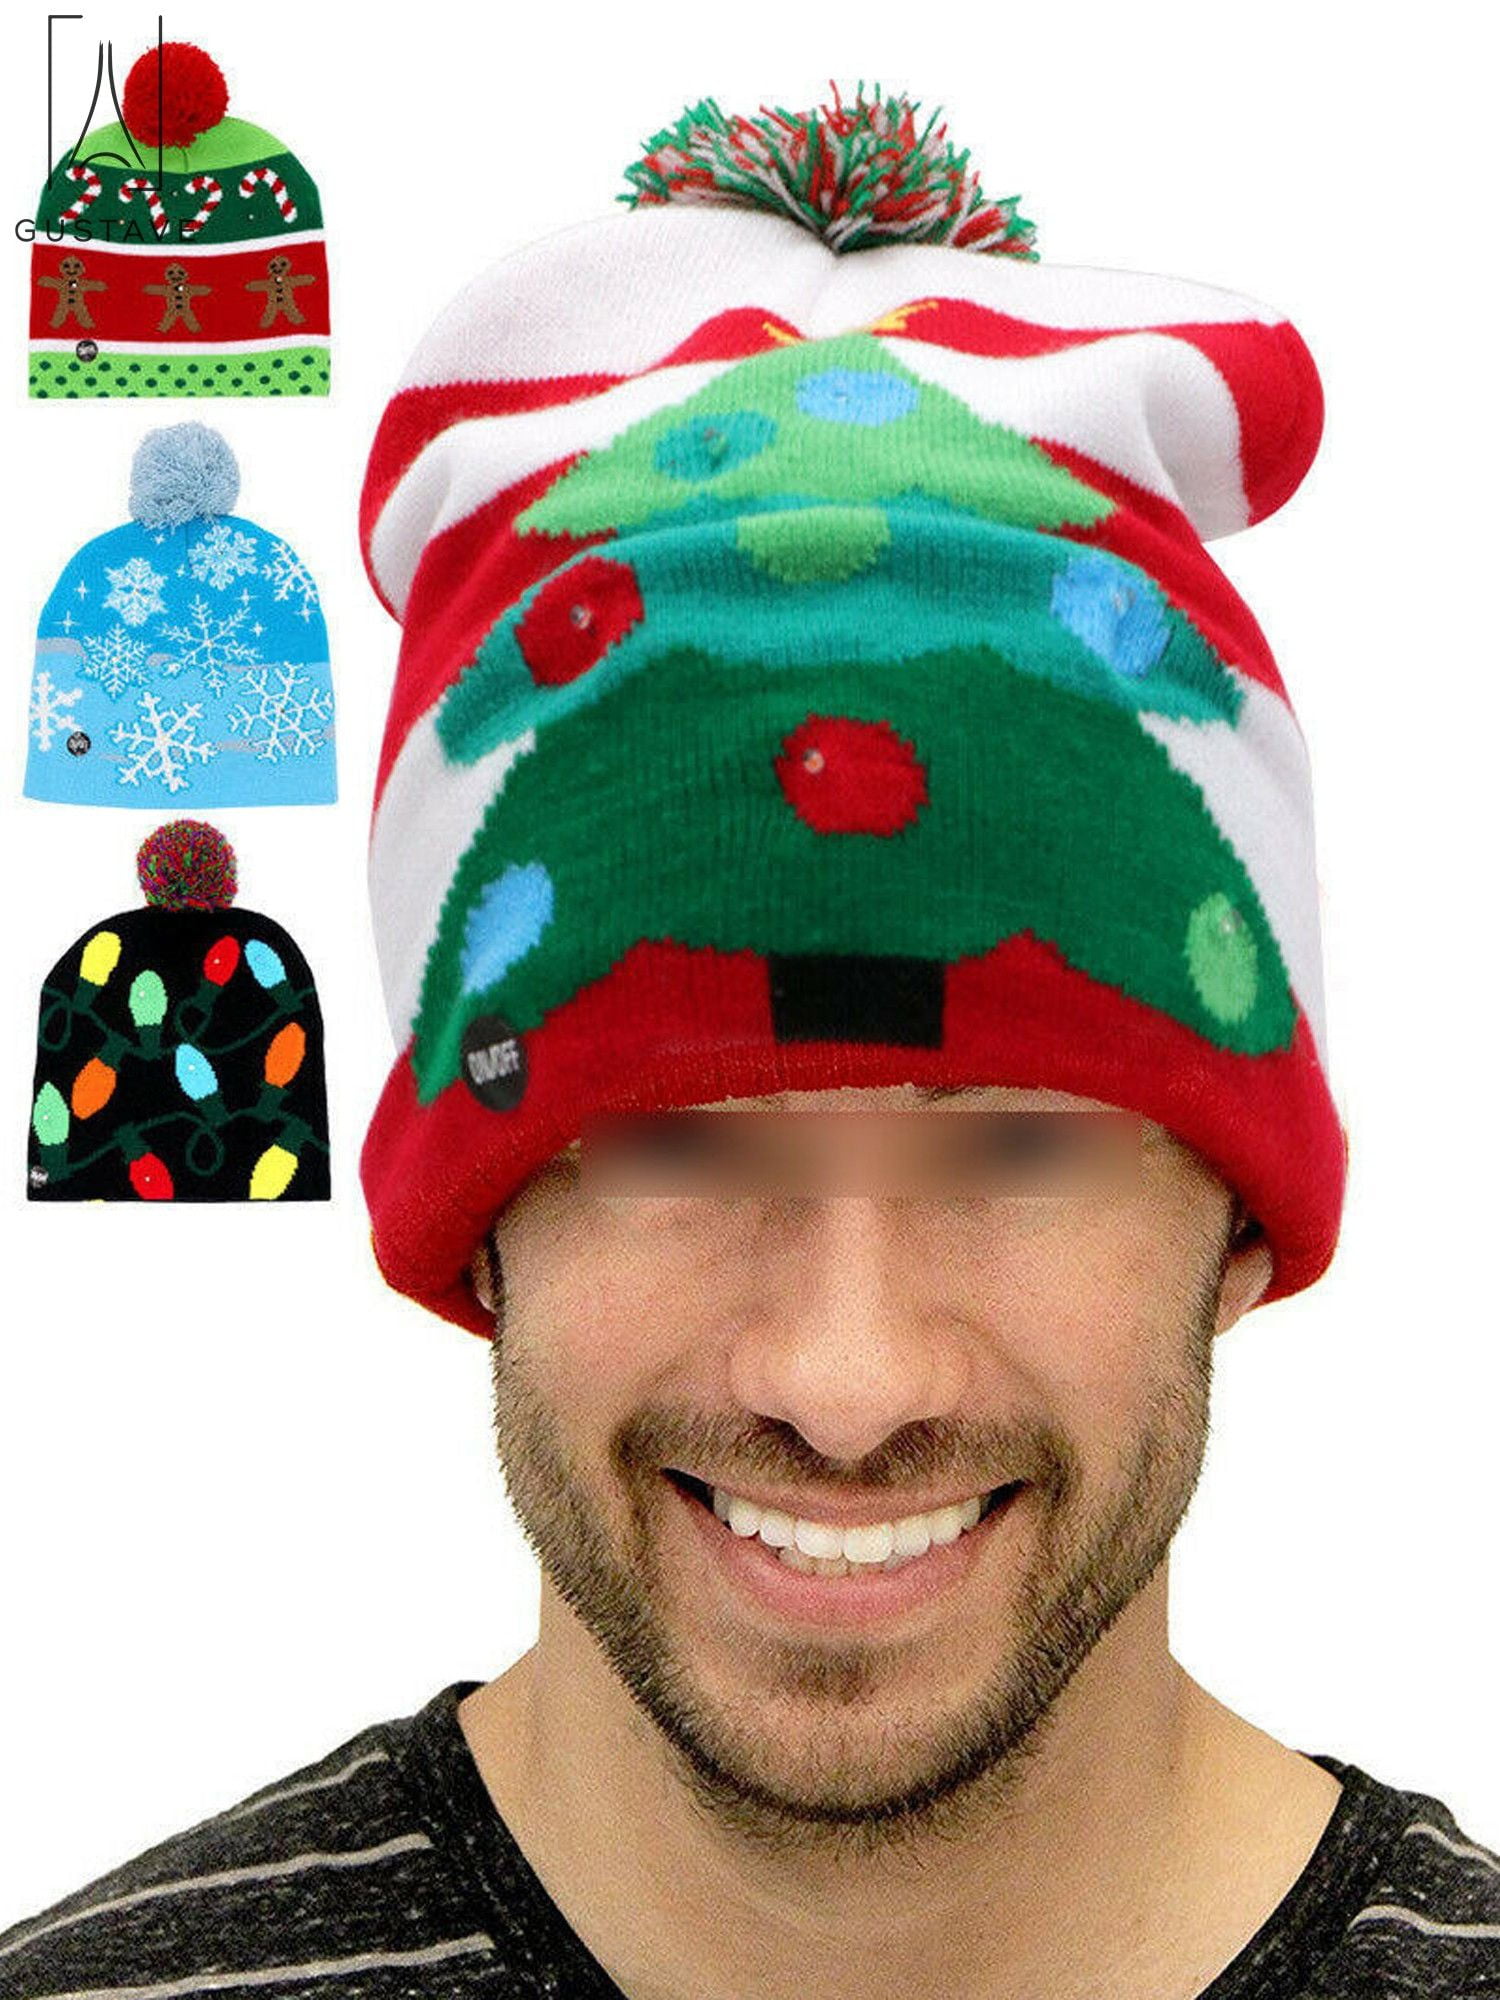 LED Christmas Hat Light up Hat Christmas Knit Cap LED Light Cap Adult Child Hat